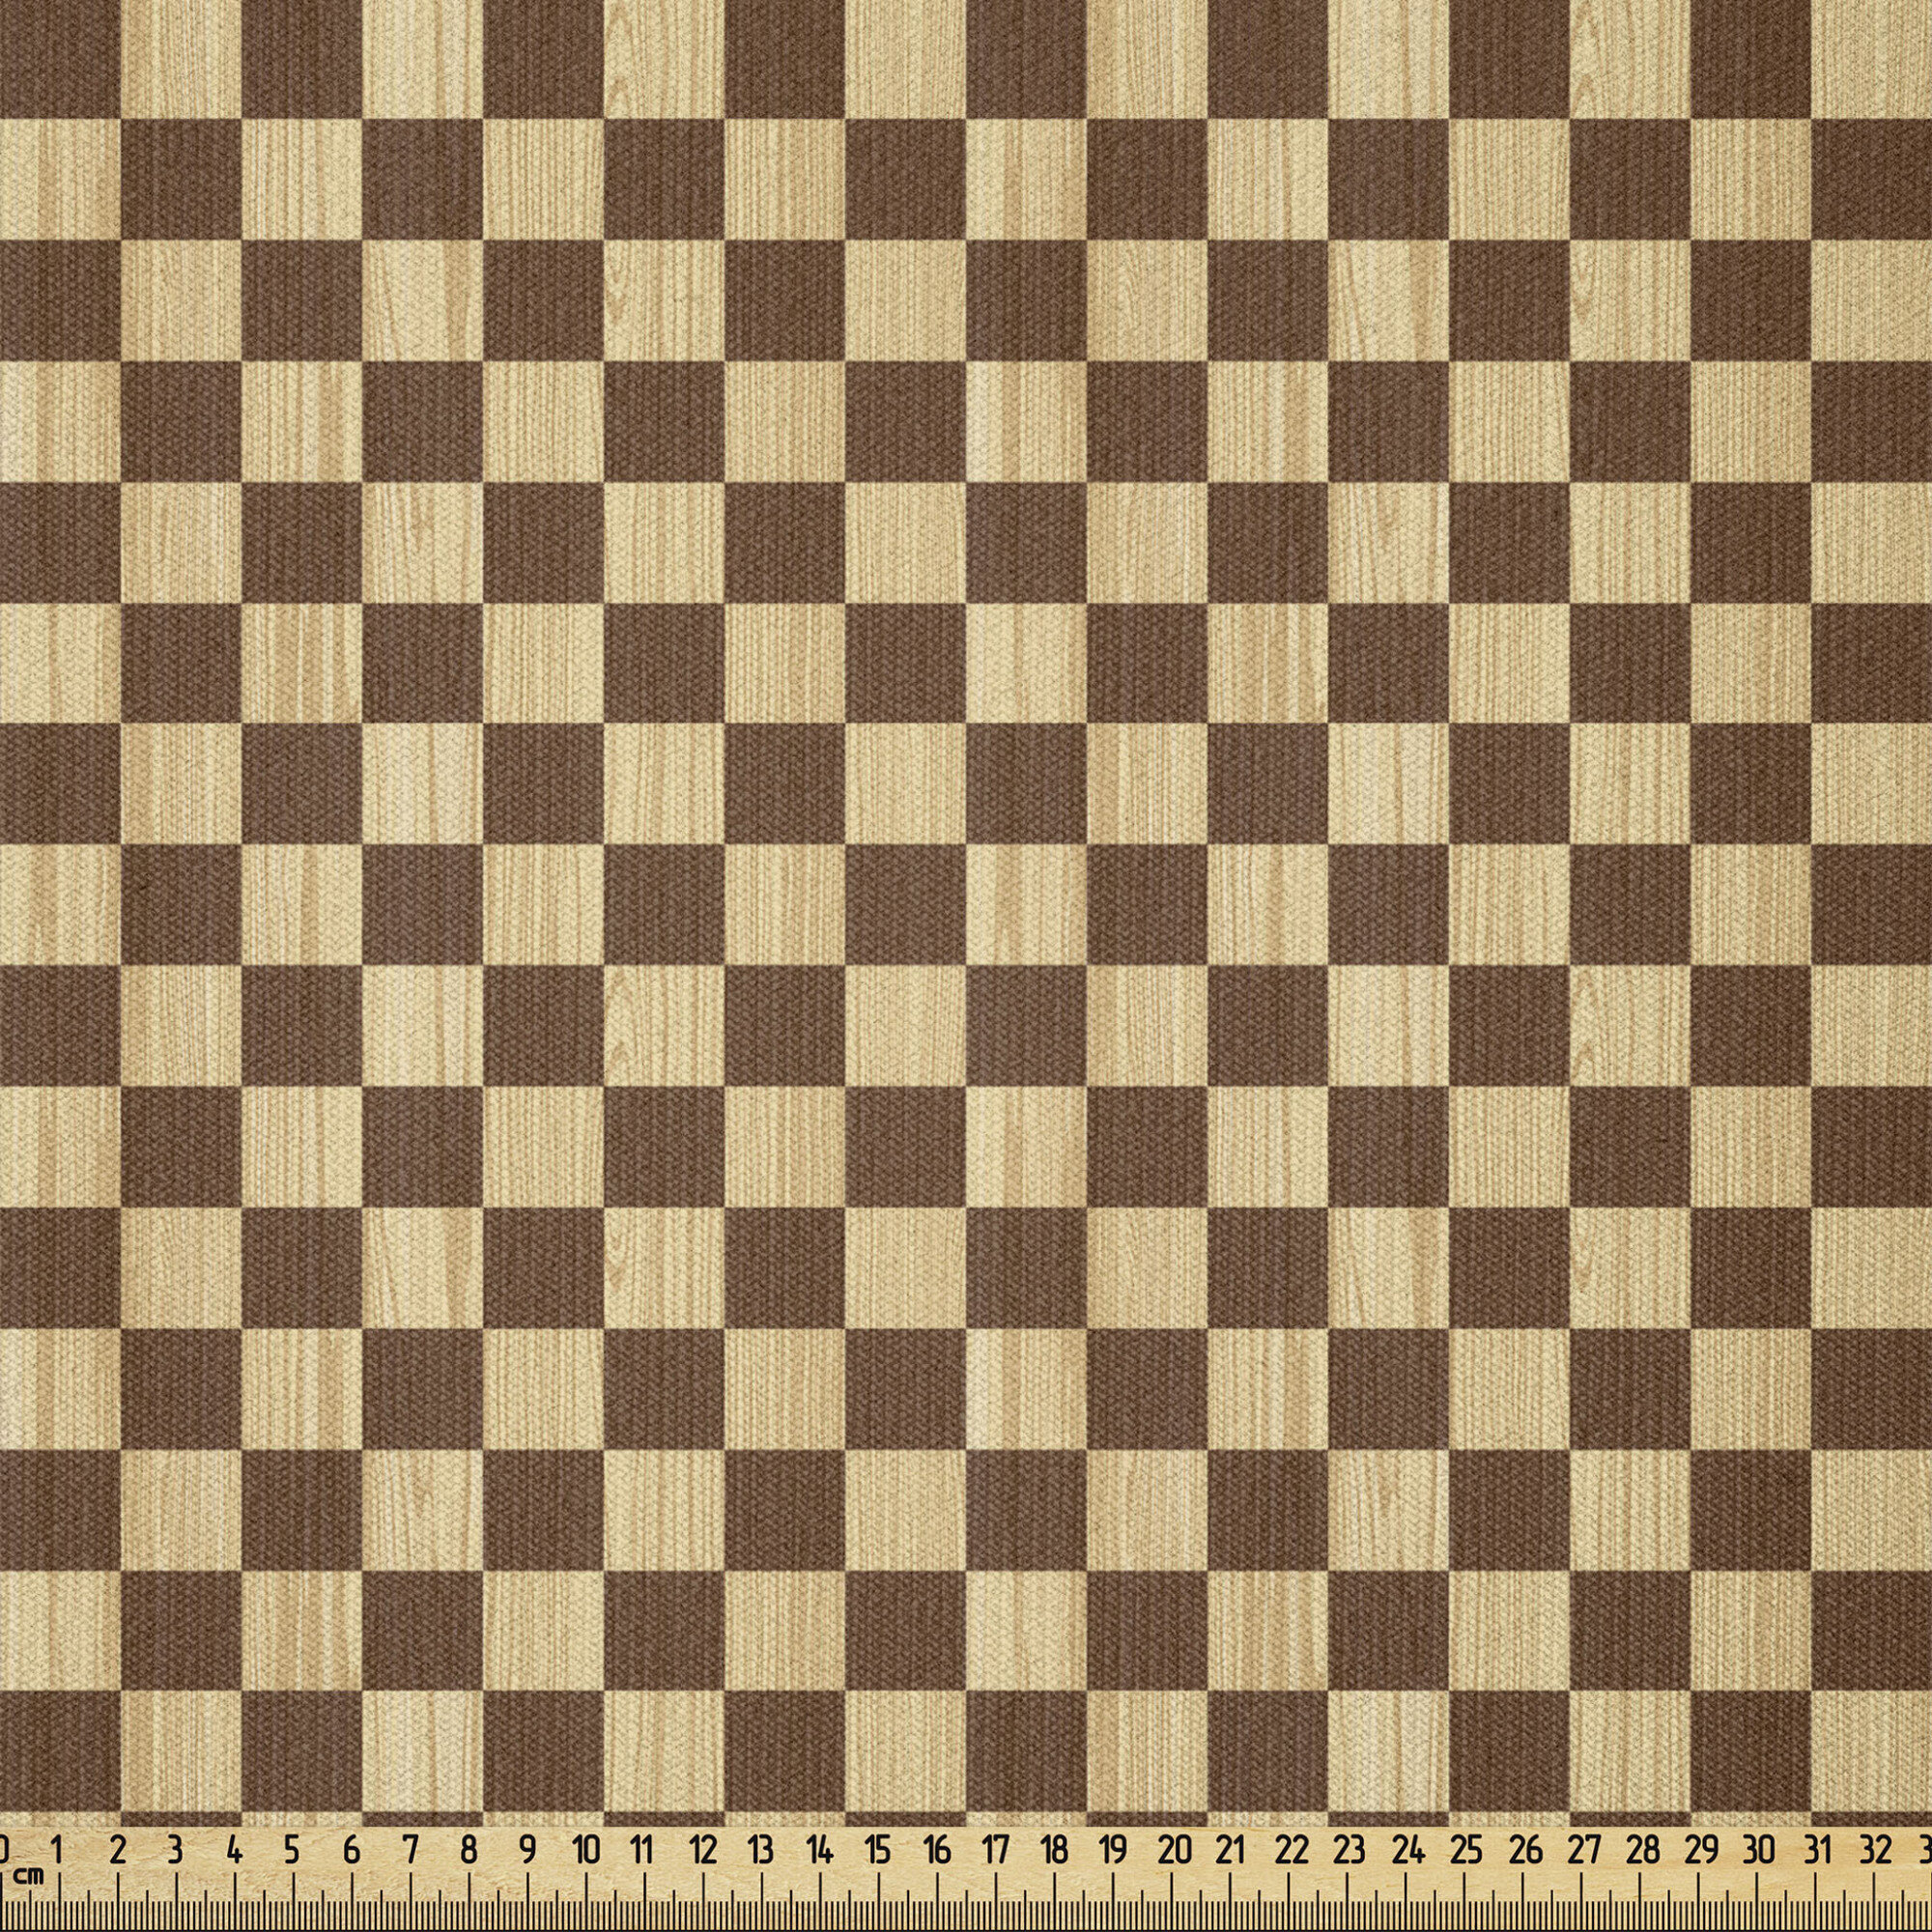 Bless international Checkered Fabric